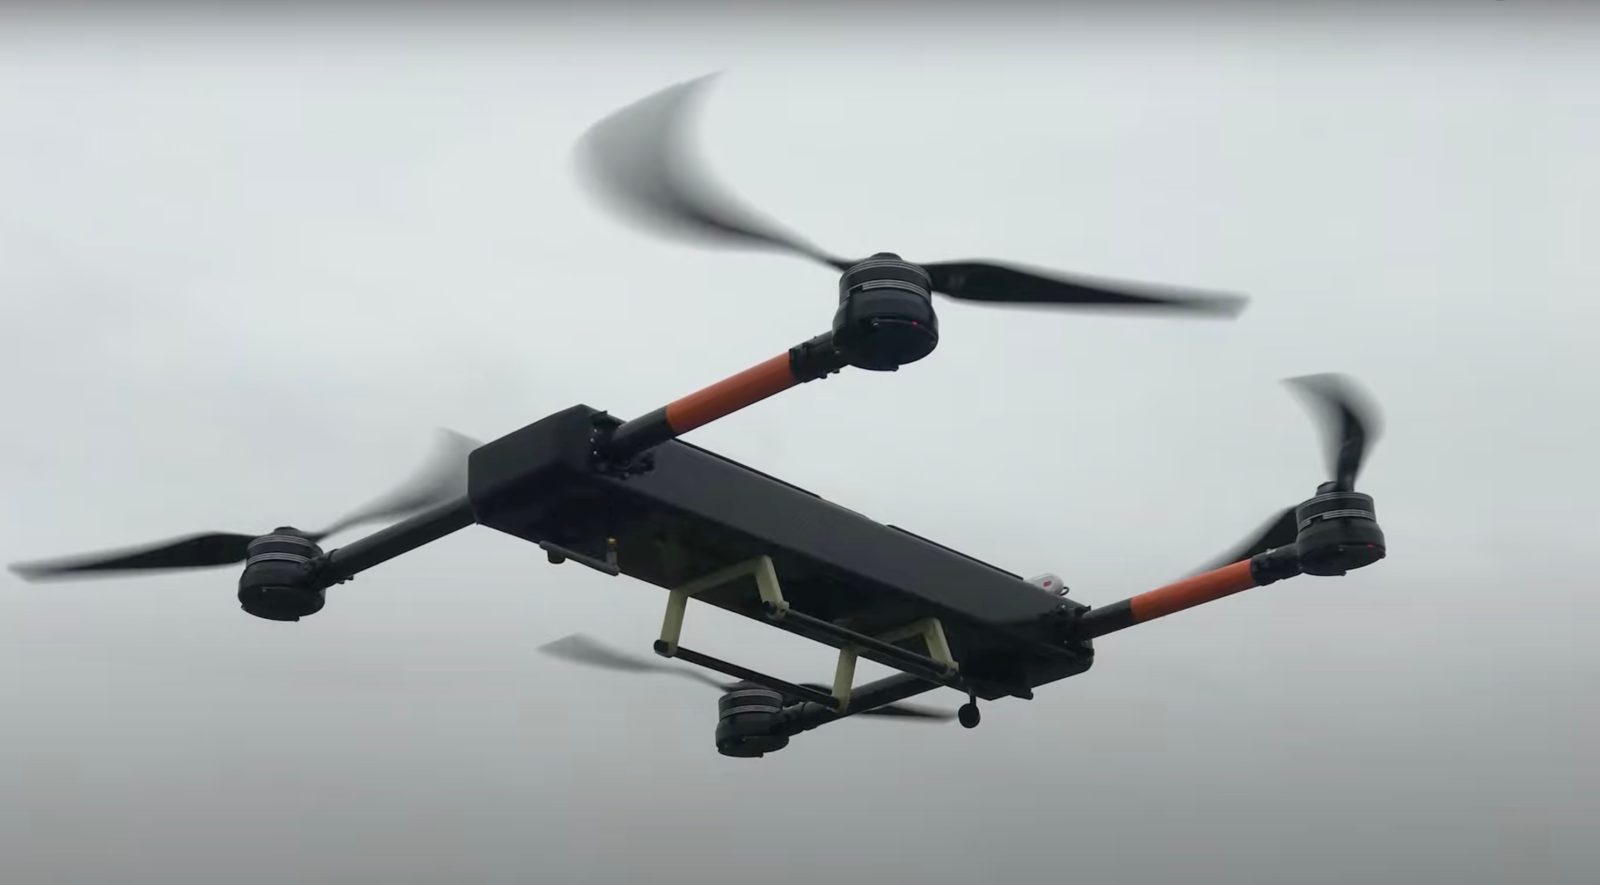 Draganfly hybrid drone